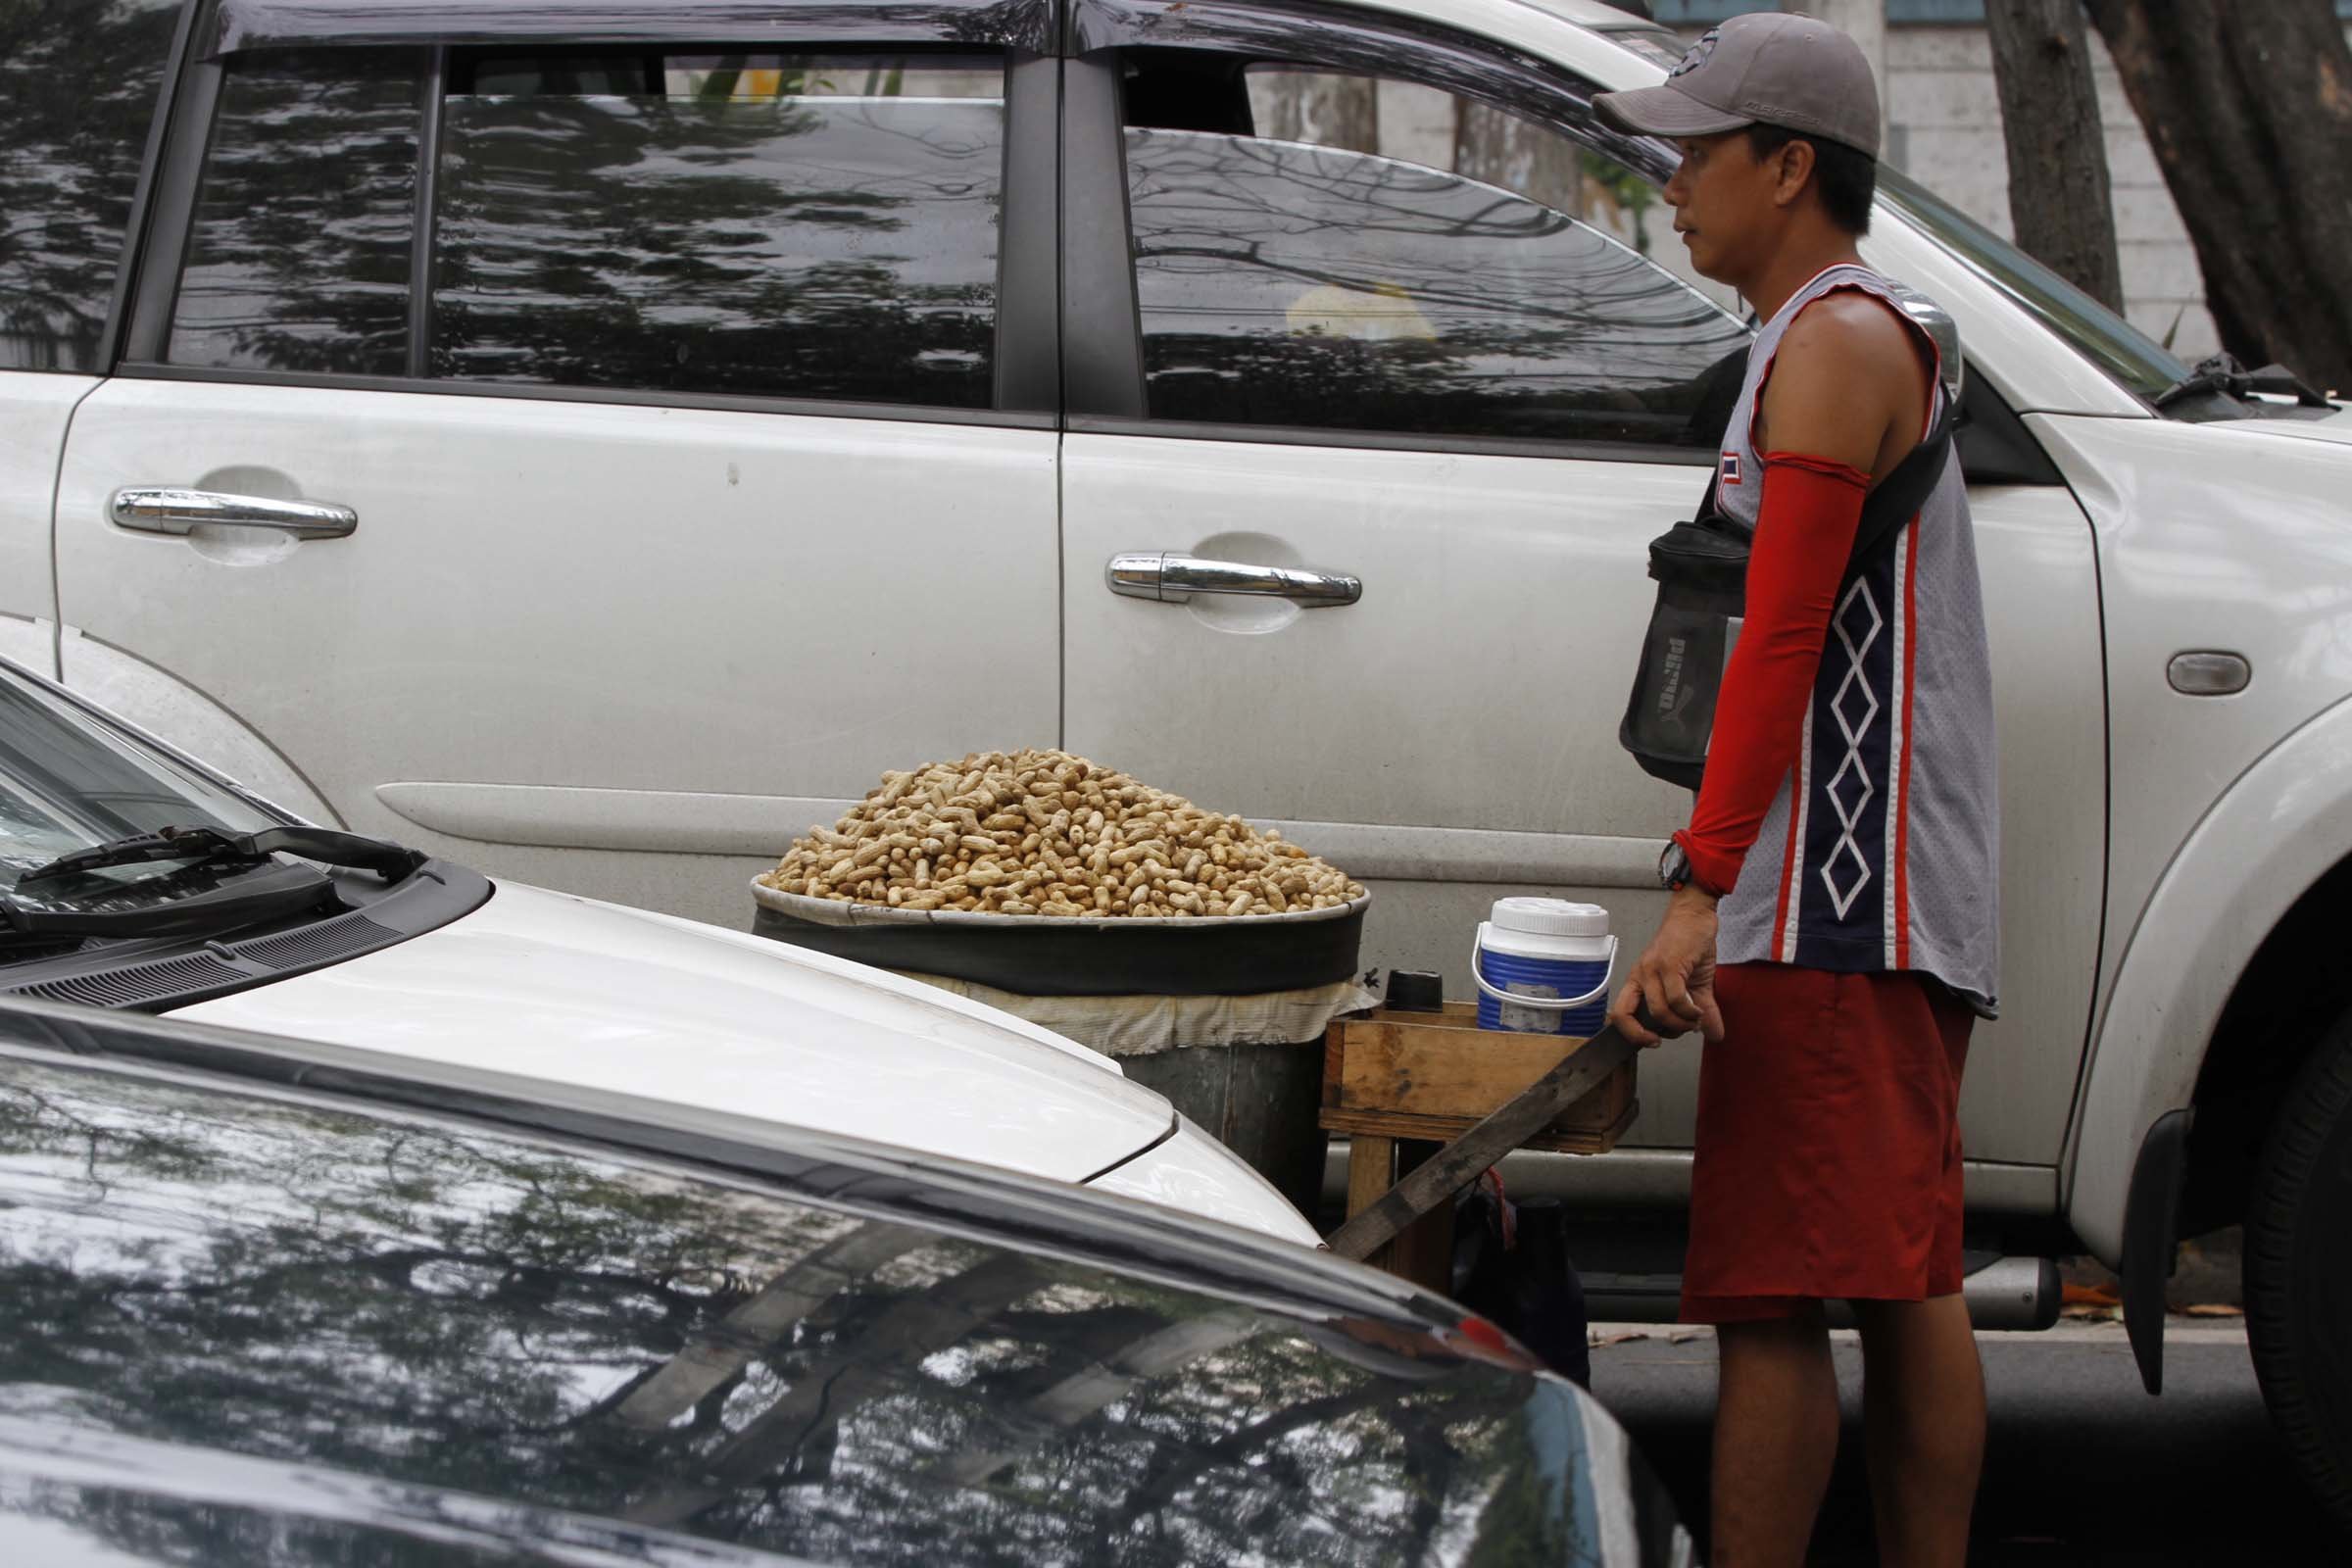 Vendor selling boil peanut